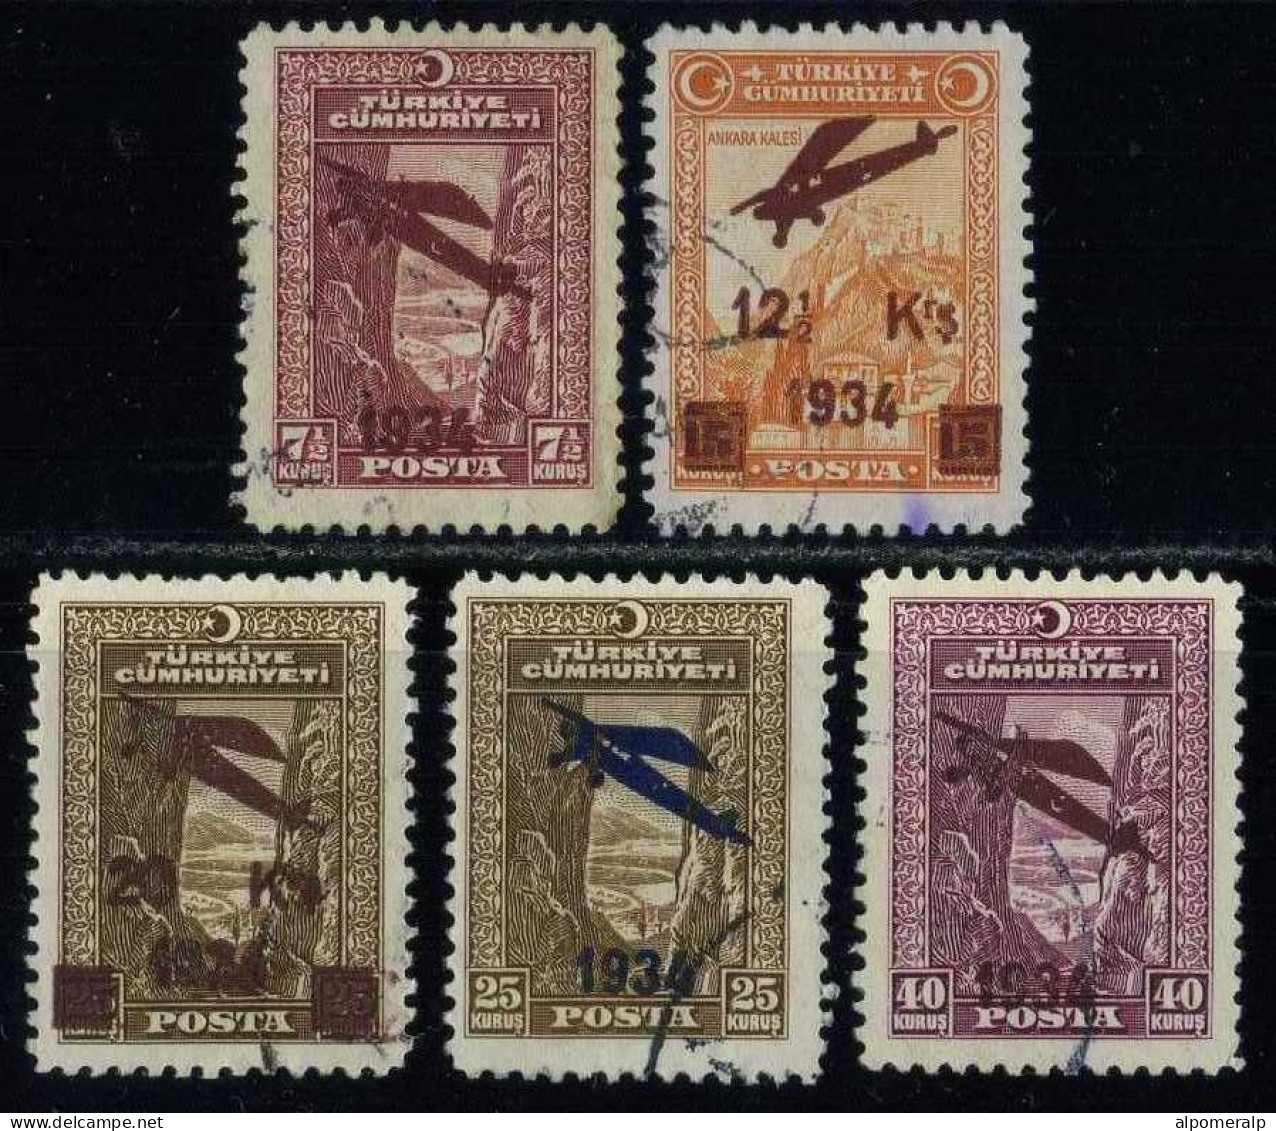 Türkiye 1934 Mi 980-984 Airmail Stamps First Issue, Opening Of The Ankara-Istanbul Airmail Line - Gebraucht